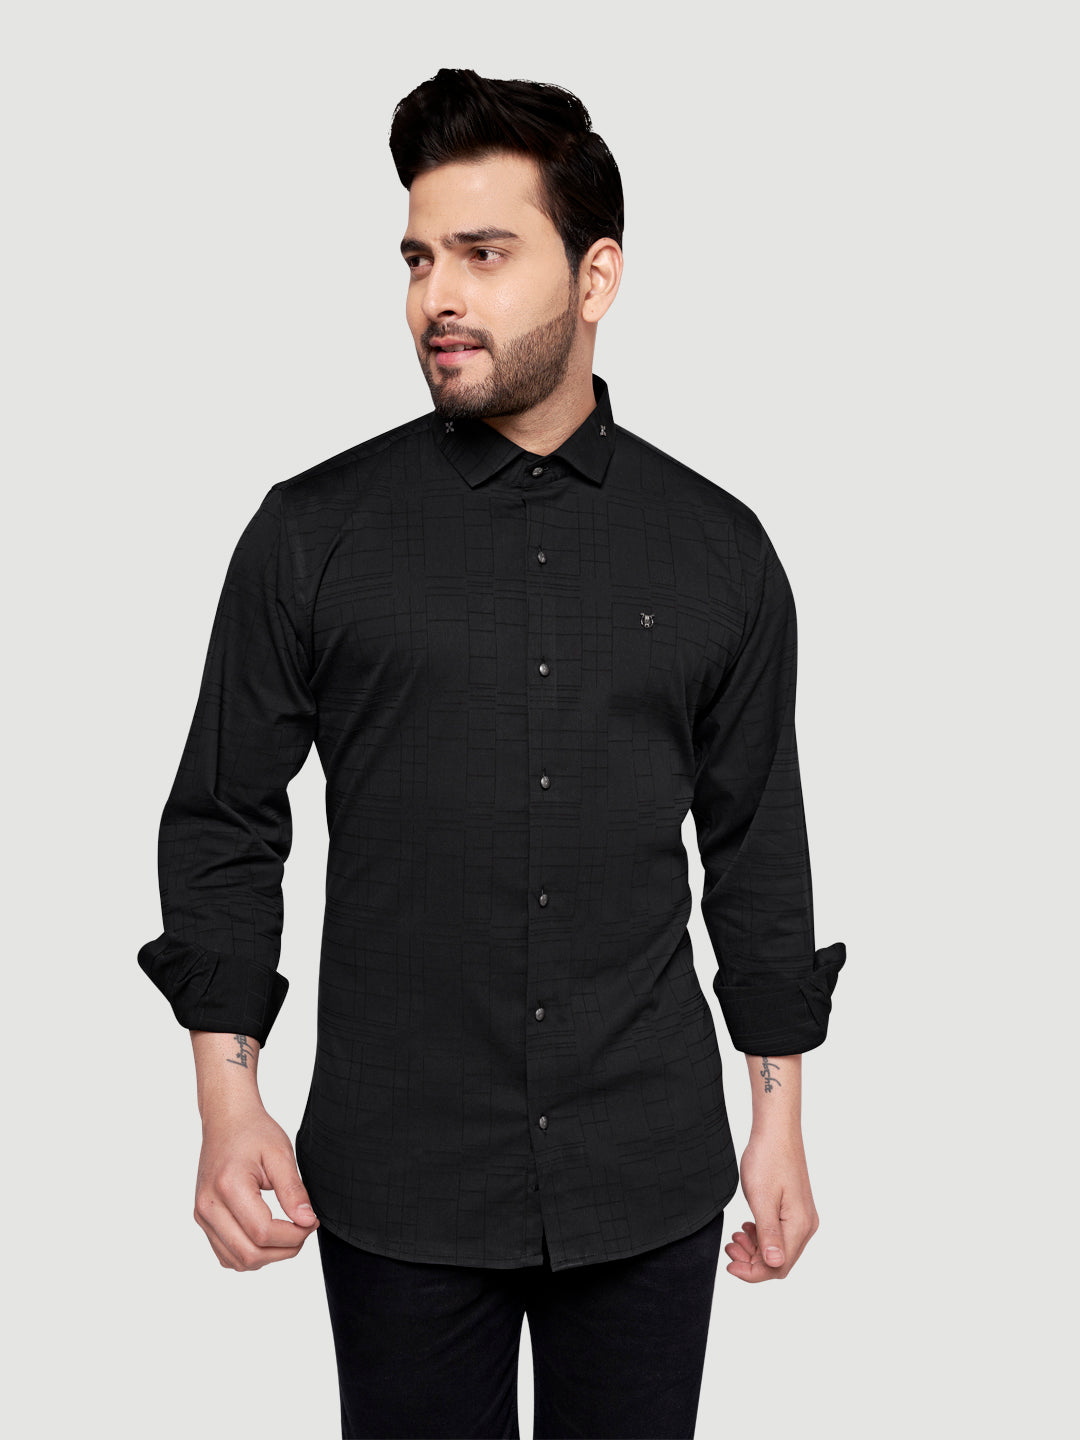 Men's Designer Shirt with Collar Accessory & Broach-3